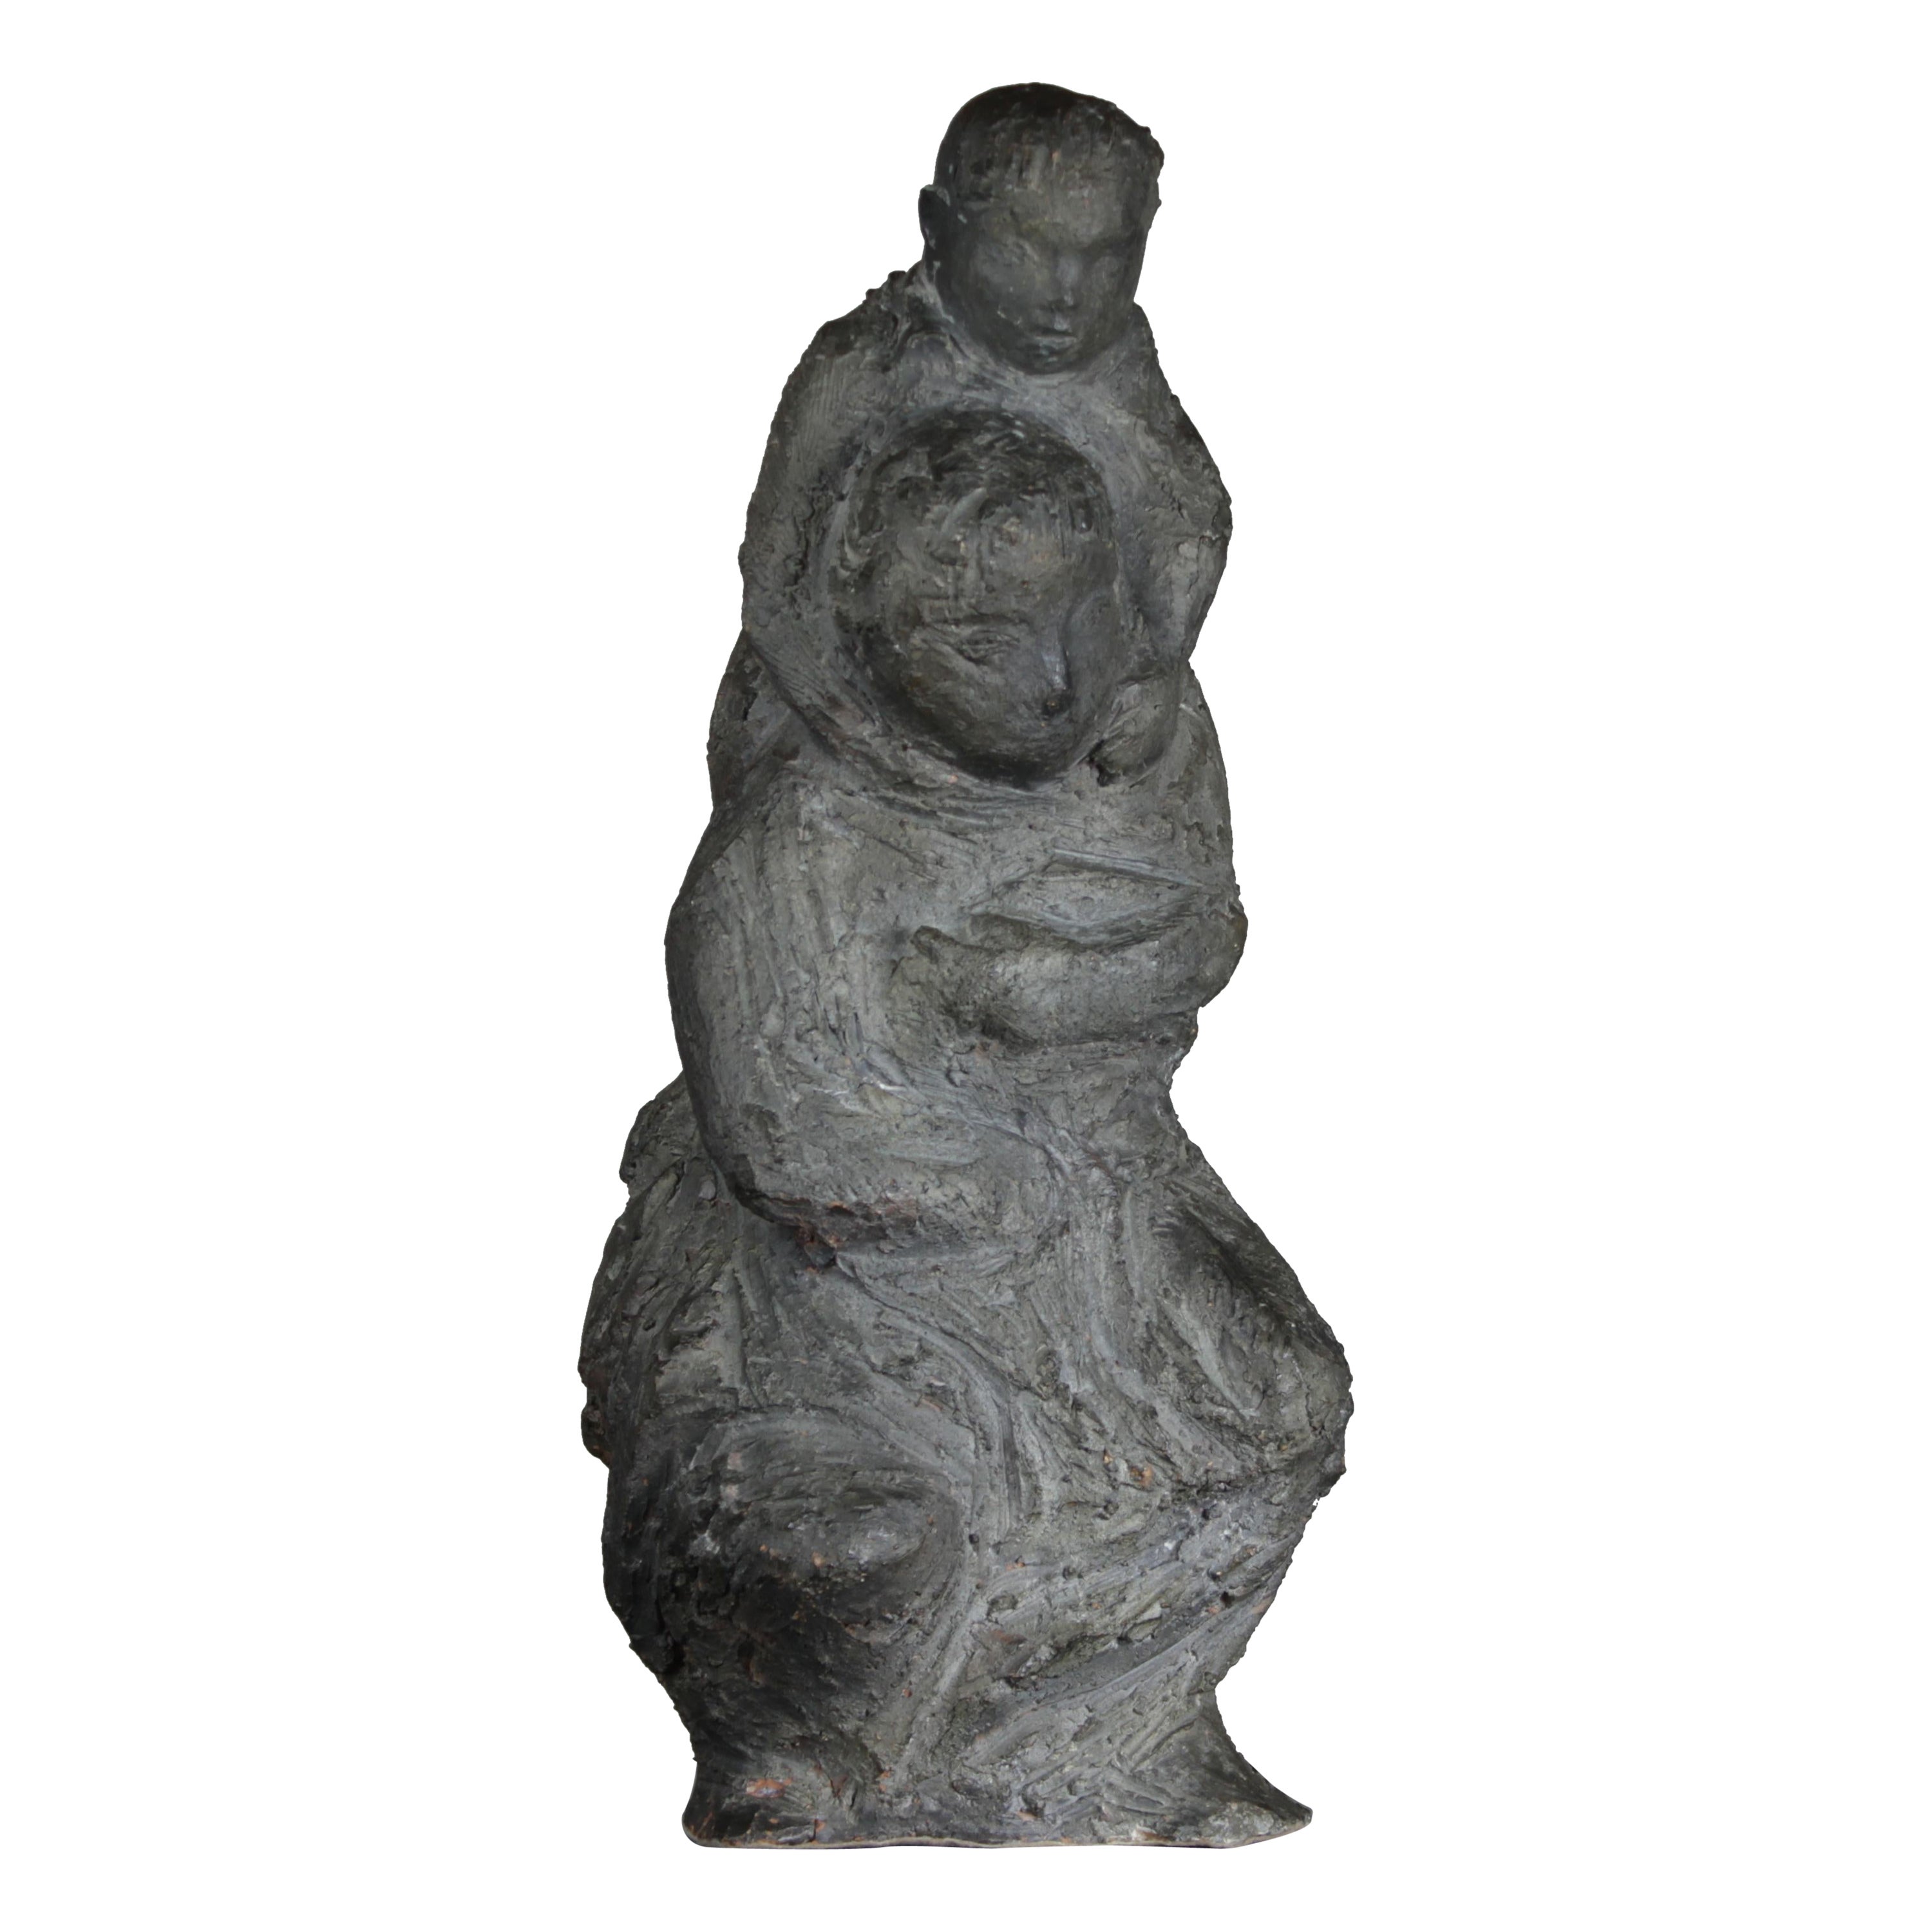 Modernist Stone Sculpture, 'Mother and Child' by Willy Van Der Putt (1925-1997)